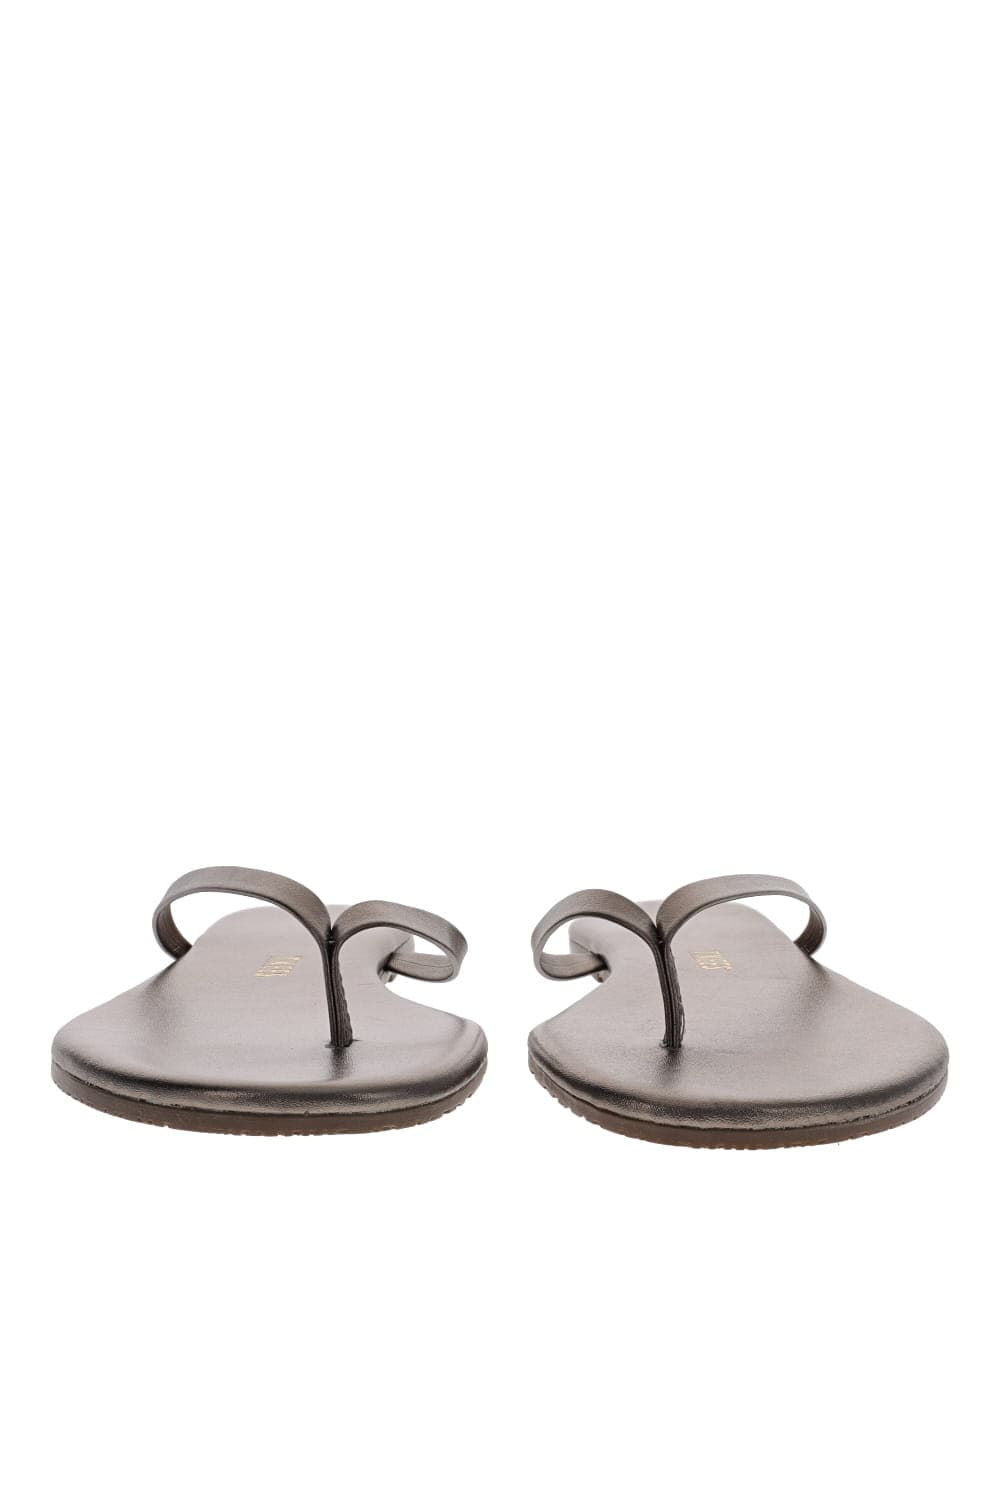 TKEES Metallics Sandal SHA-02 Frosty Grey